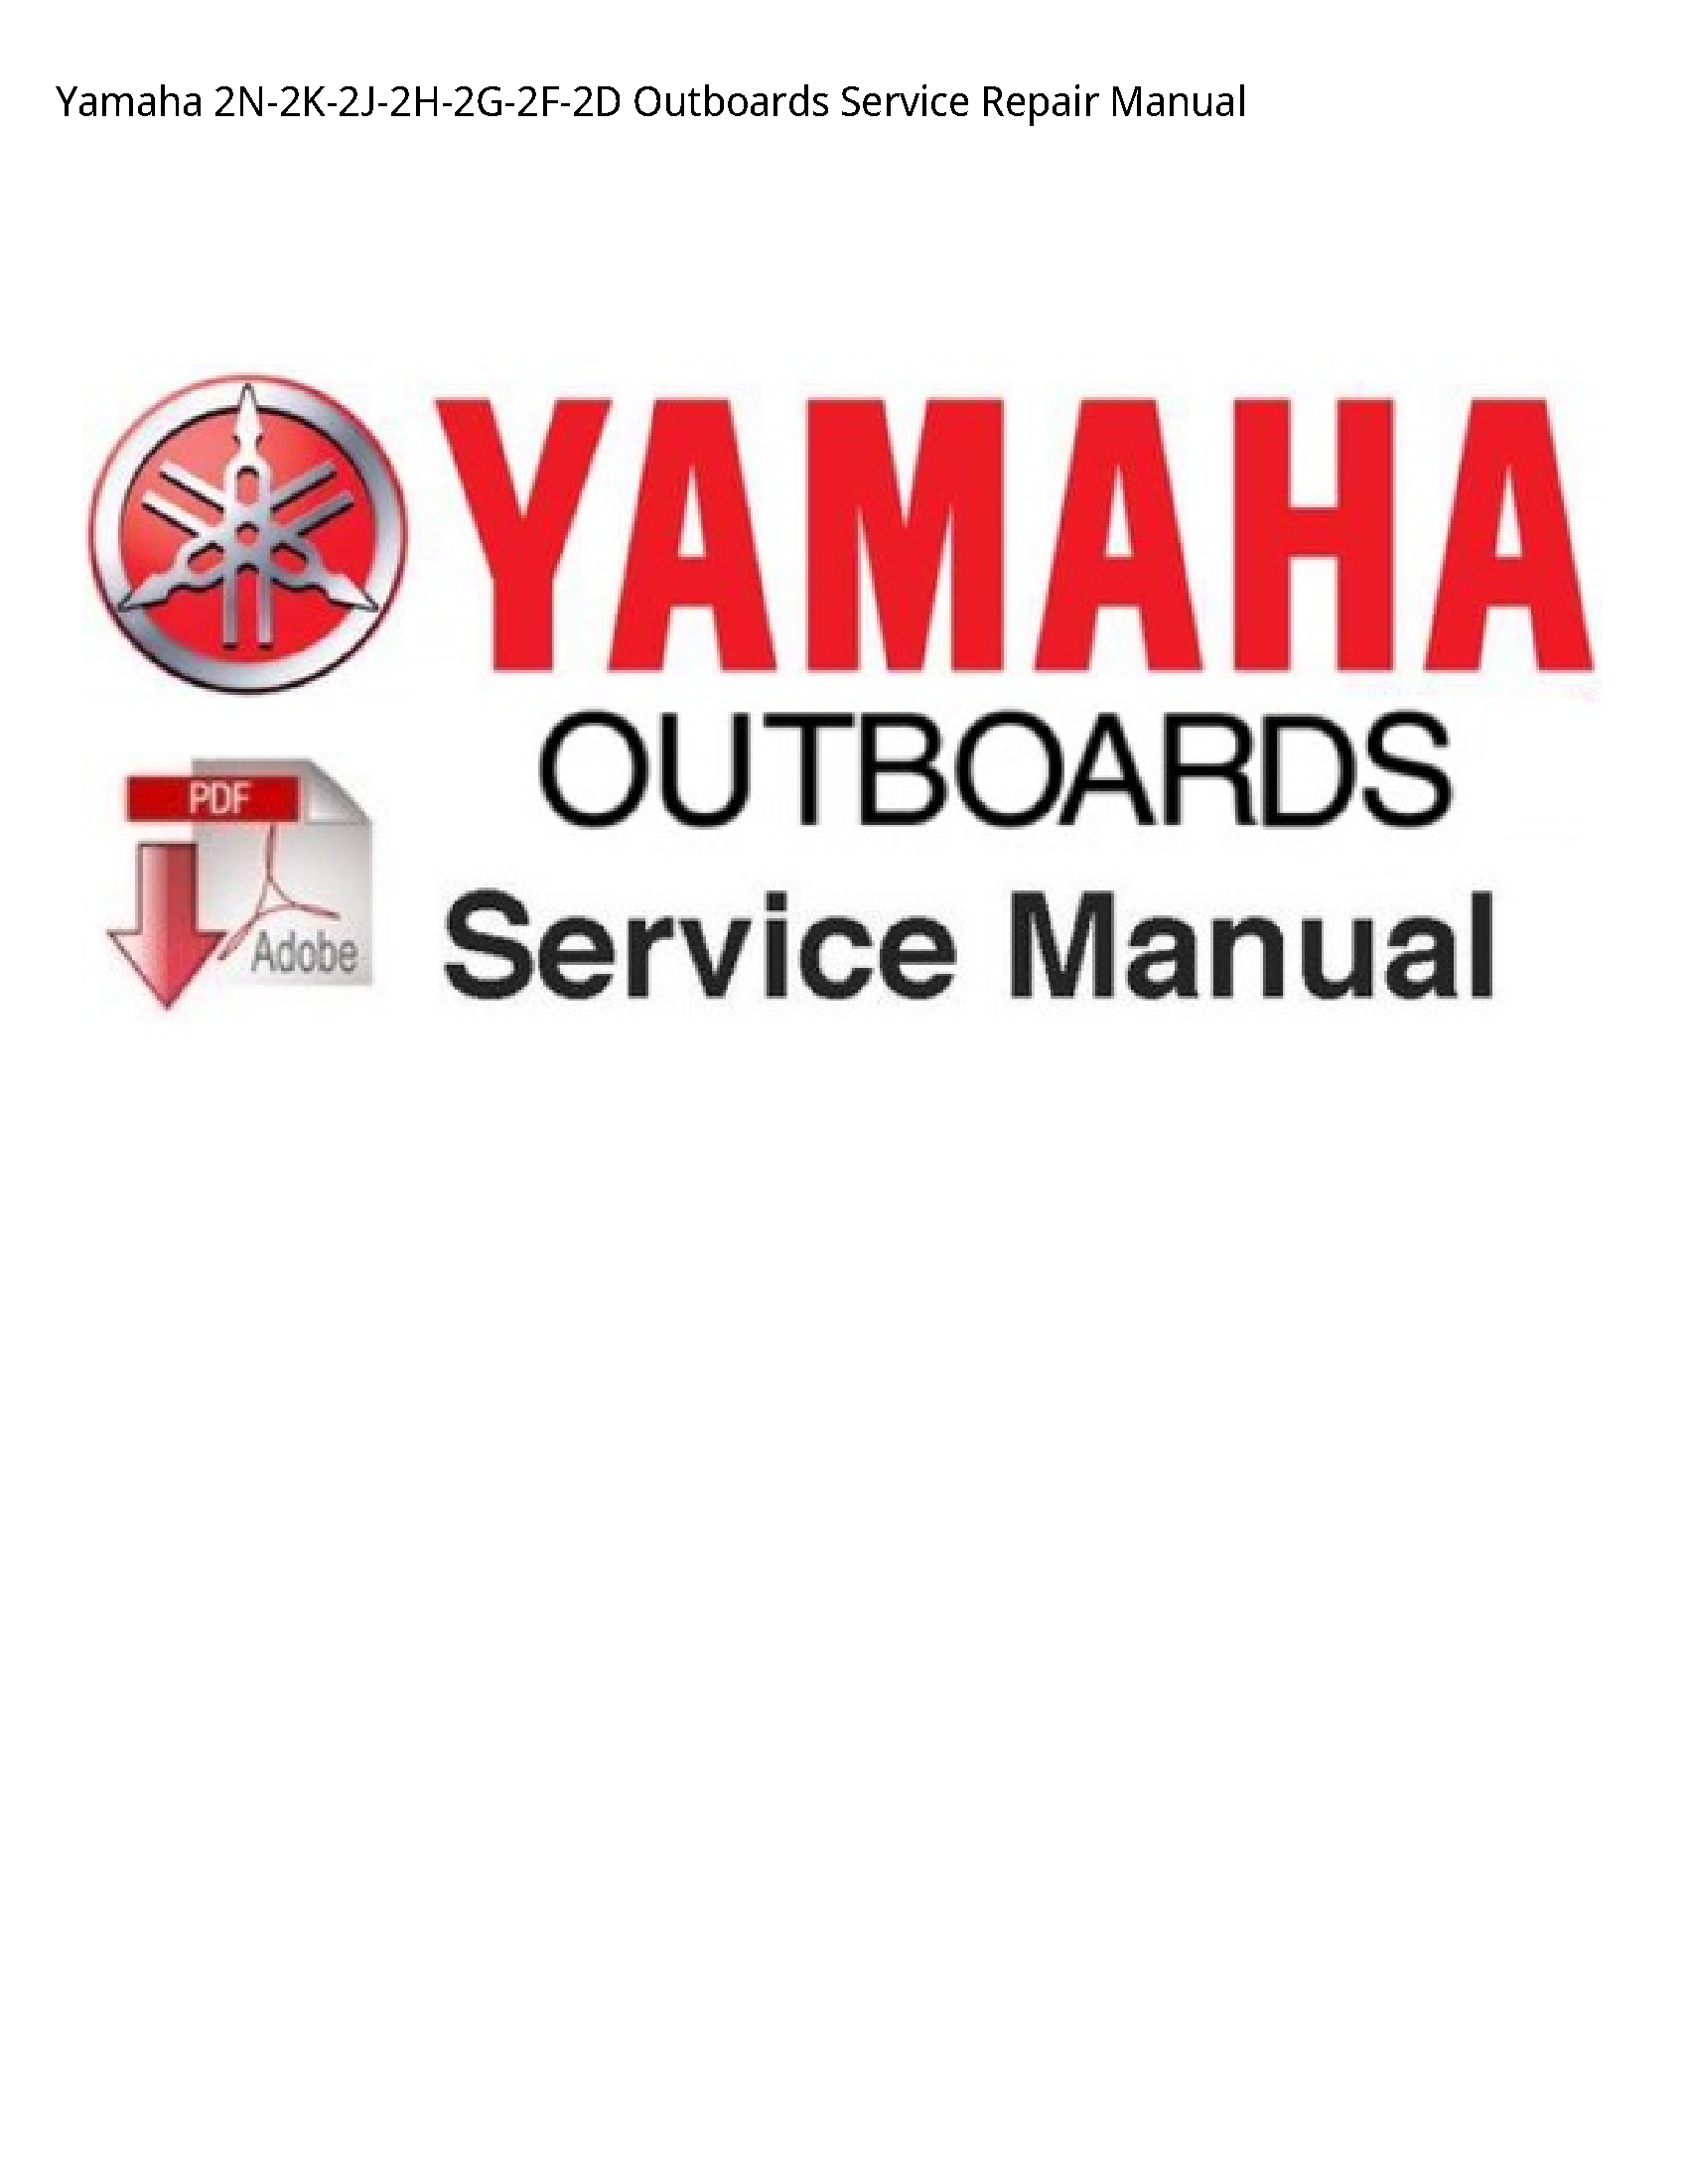 Yamaha 2N-2K-2J-2H-2G-2F-2D Outboards manual